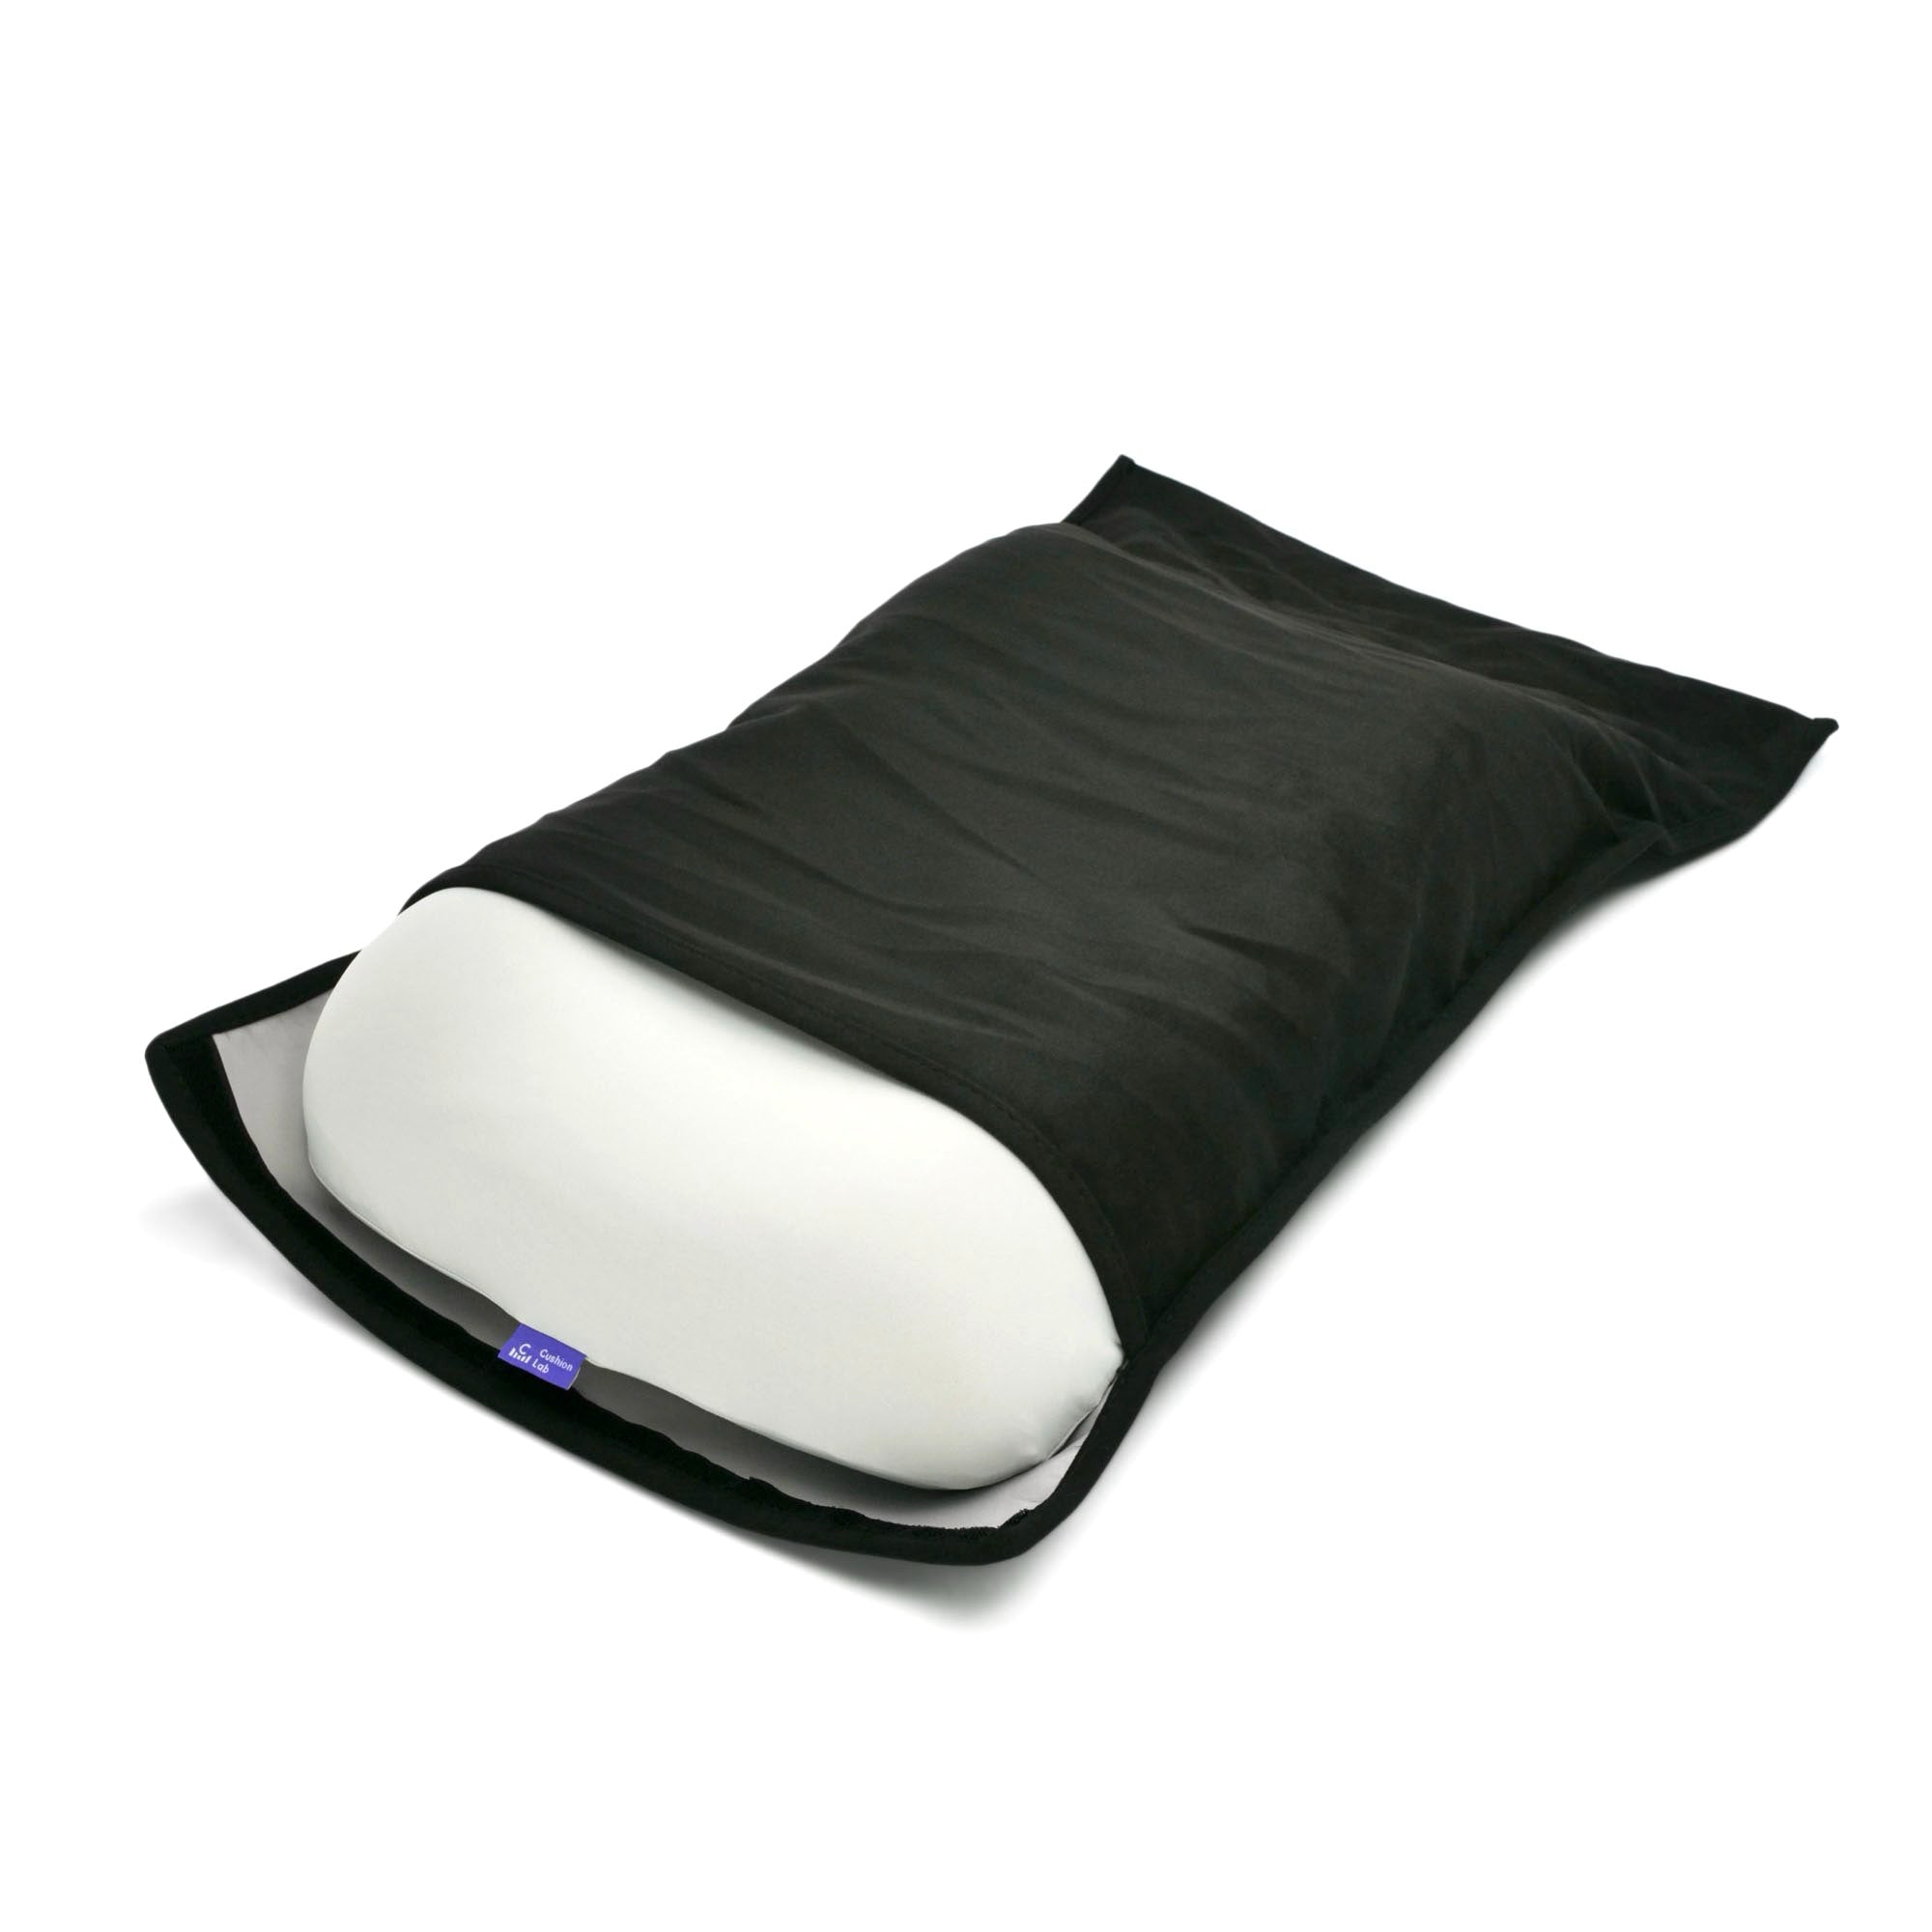 Cushion Lab Deep Sleep Pillow